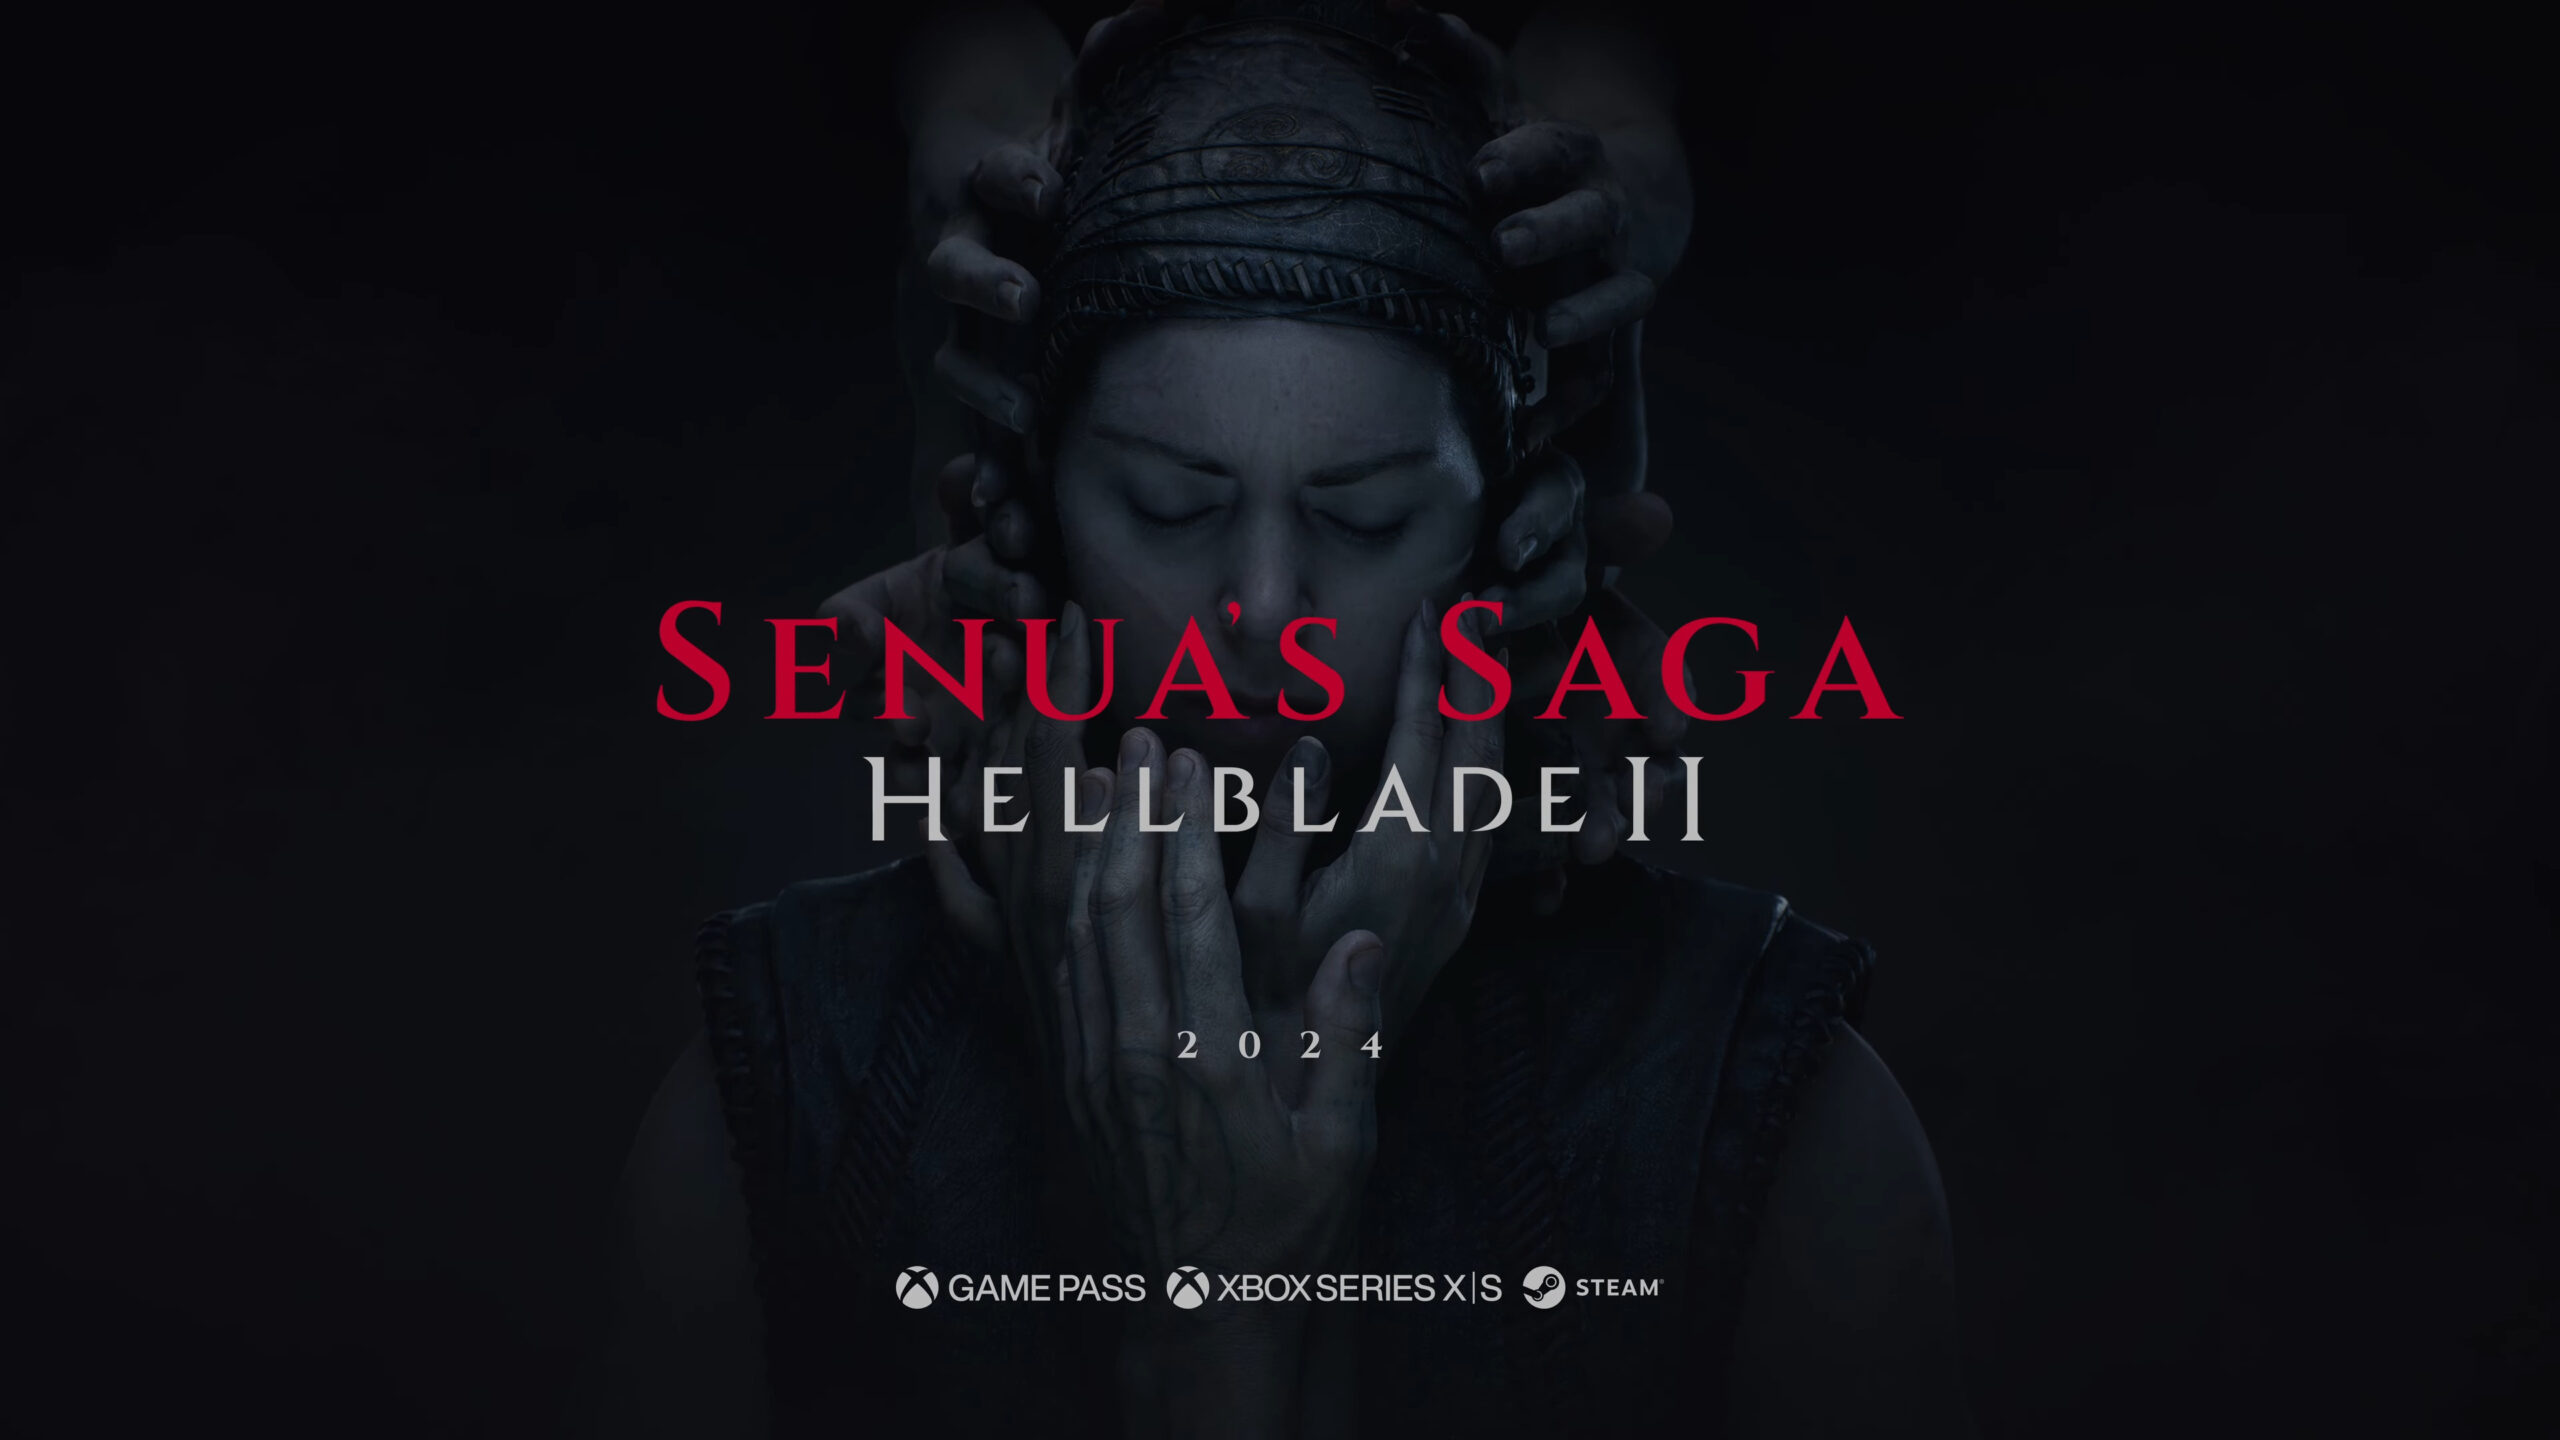 Senua's Saga: Hellblade II Shows Off New Trailer - Rely on Horror